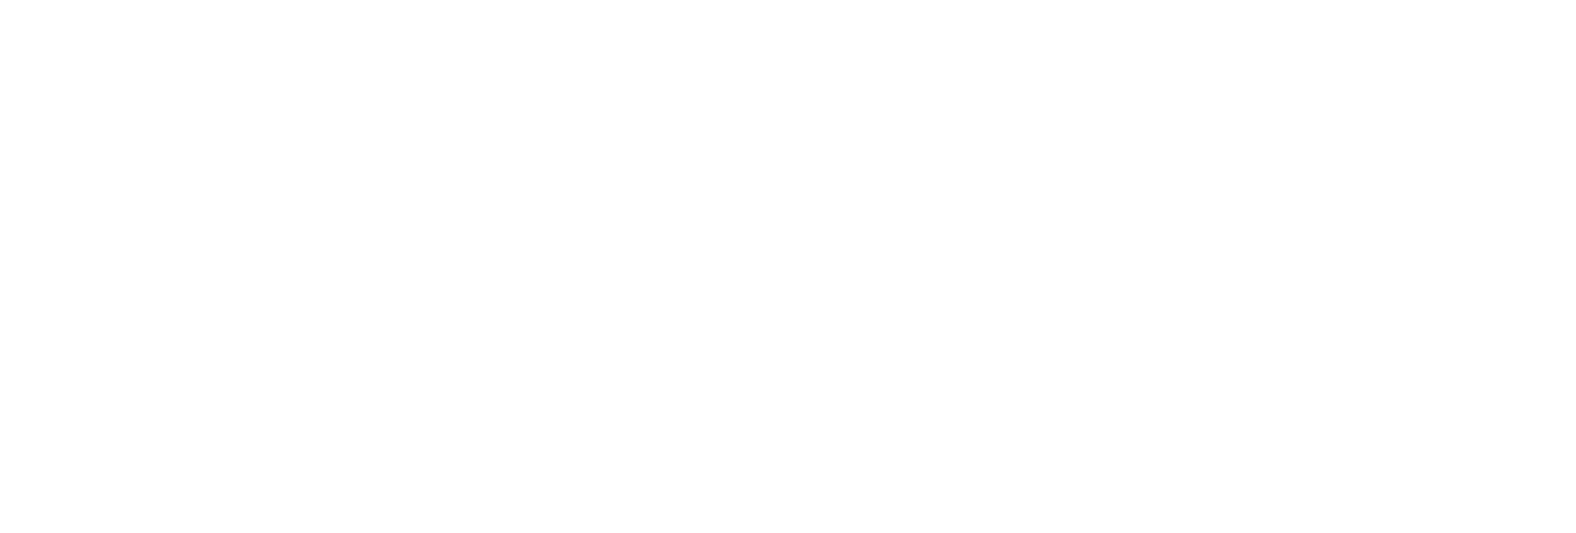 FinWise Bancorp logo large for dark backgrounds (transparent PNG)